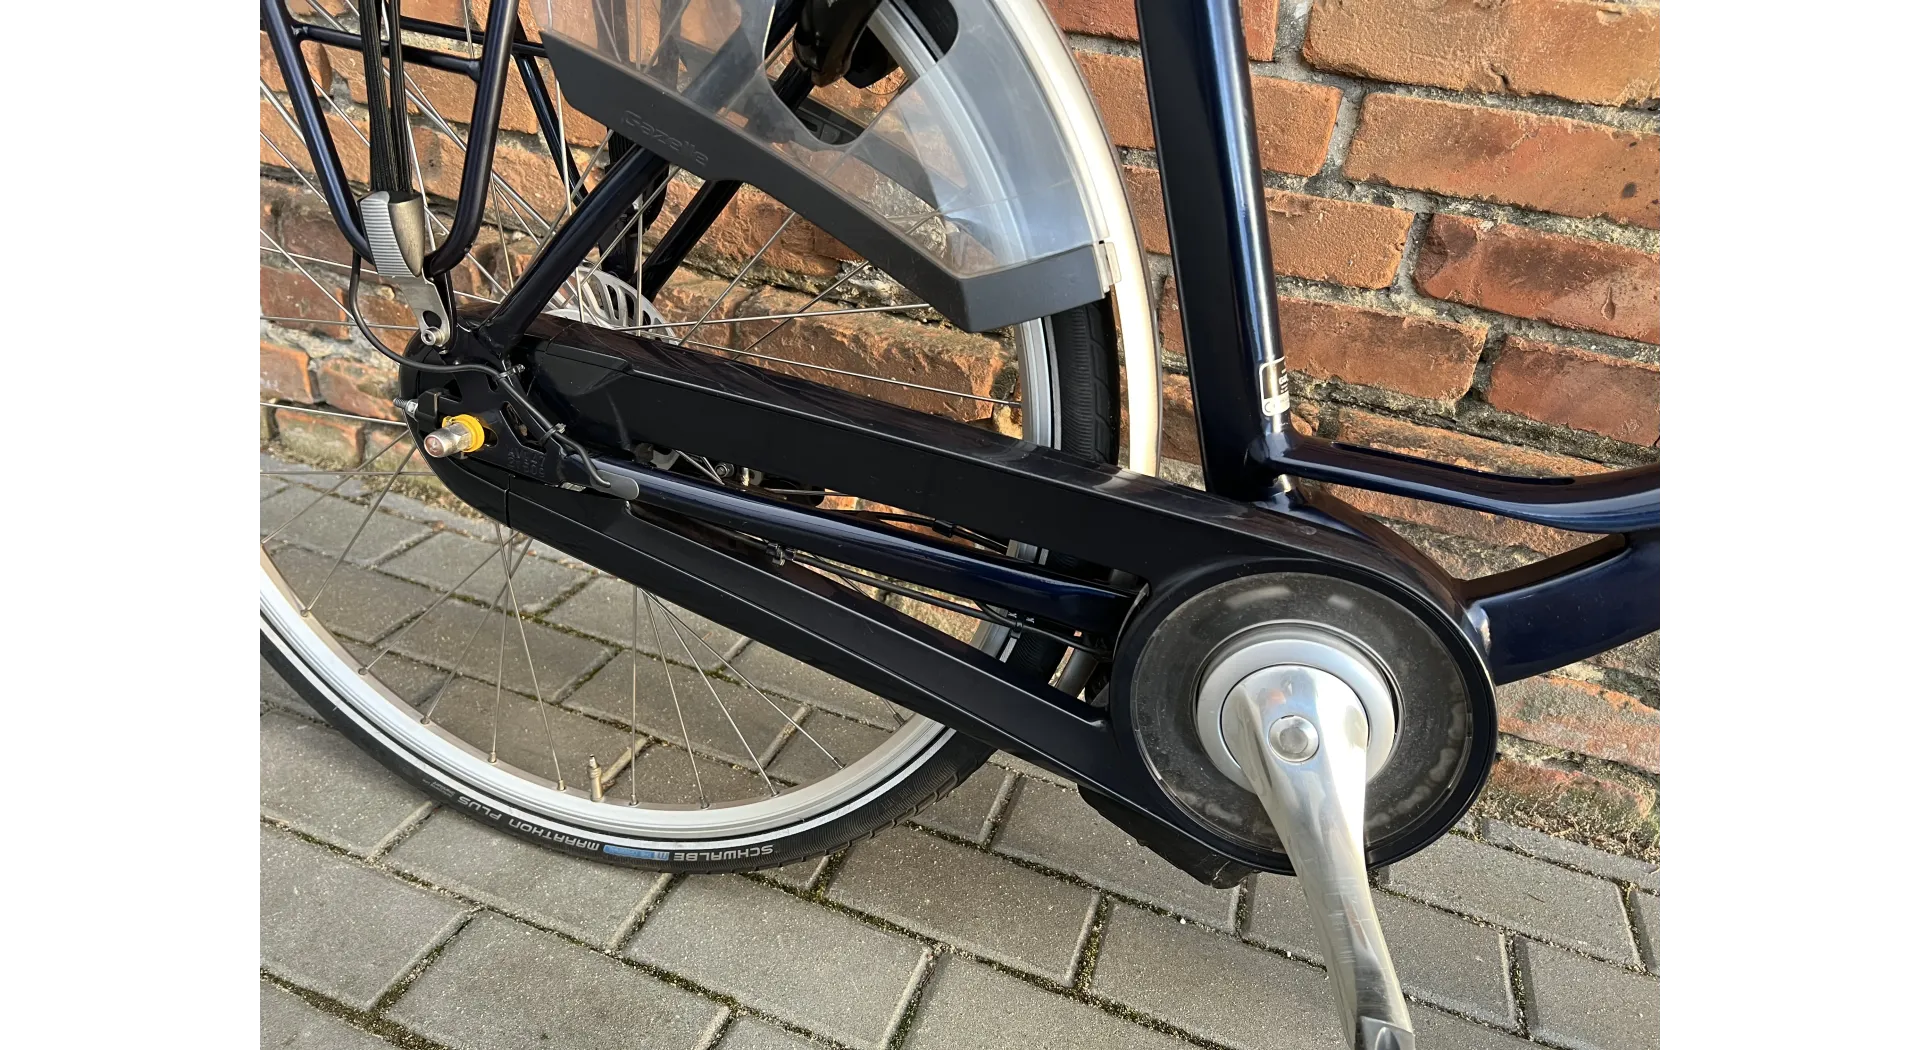 Gazelle Orange 28'' Impulse GOLD, rower elektryczny, holenderski